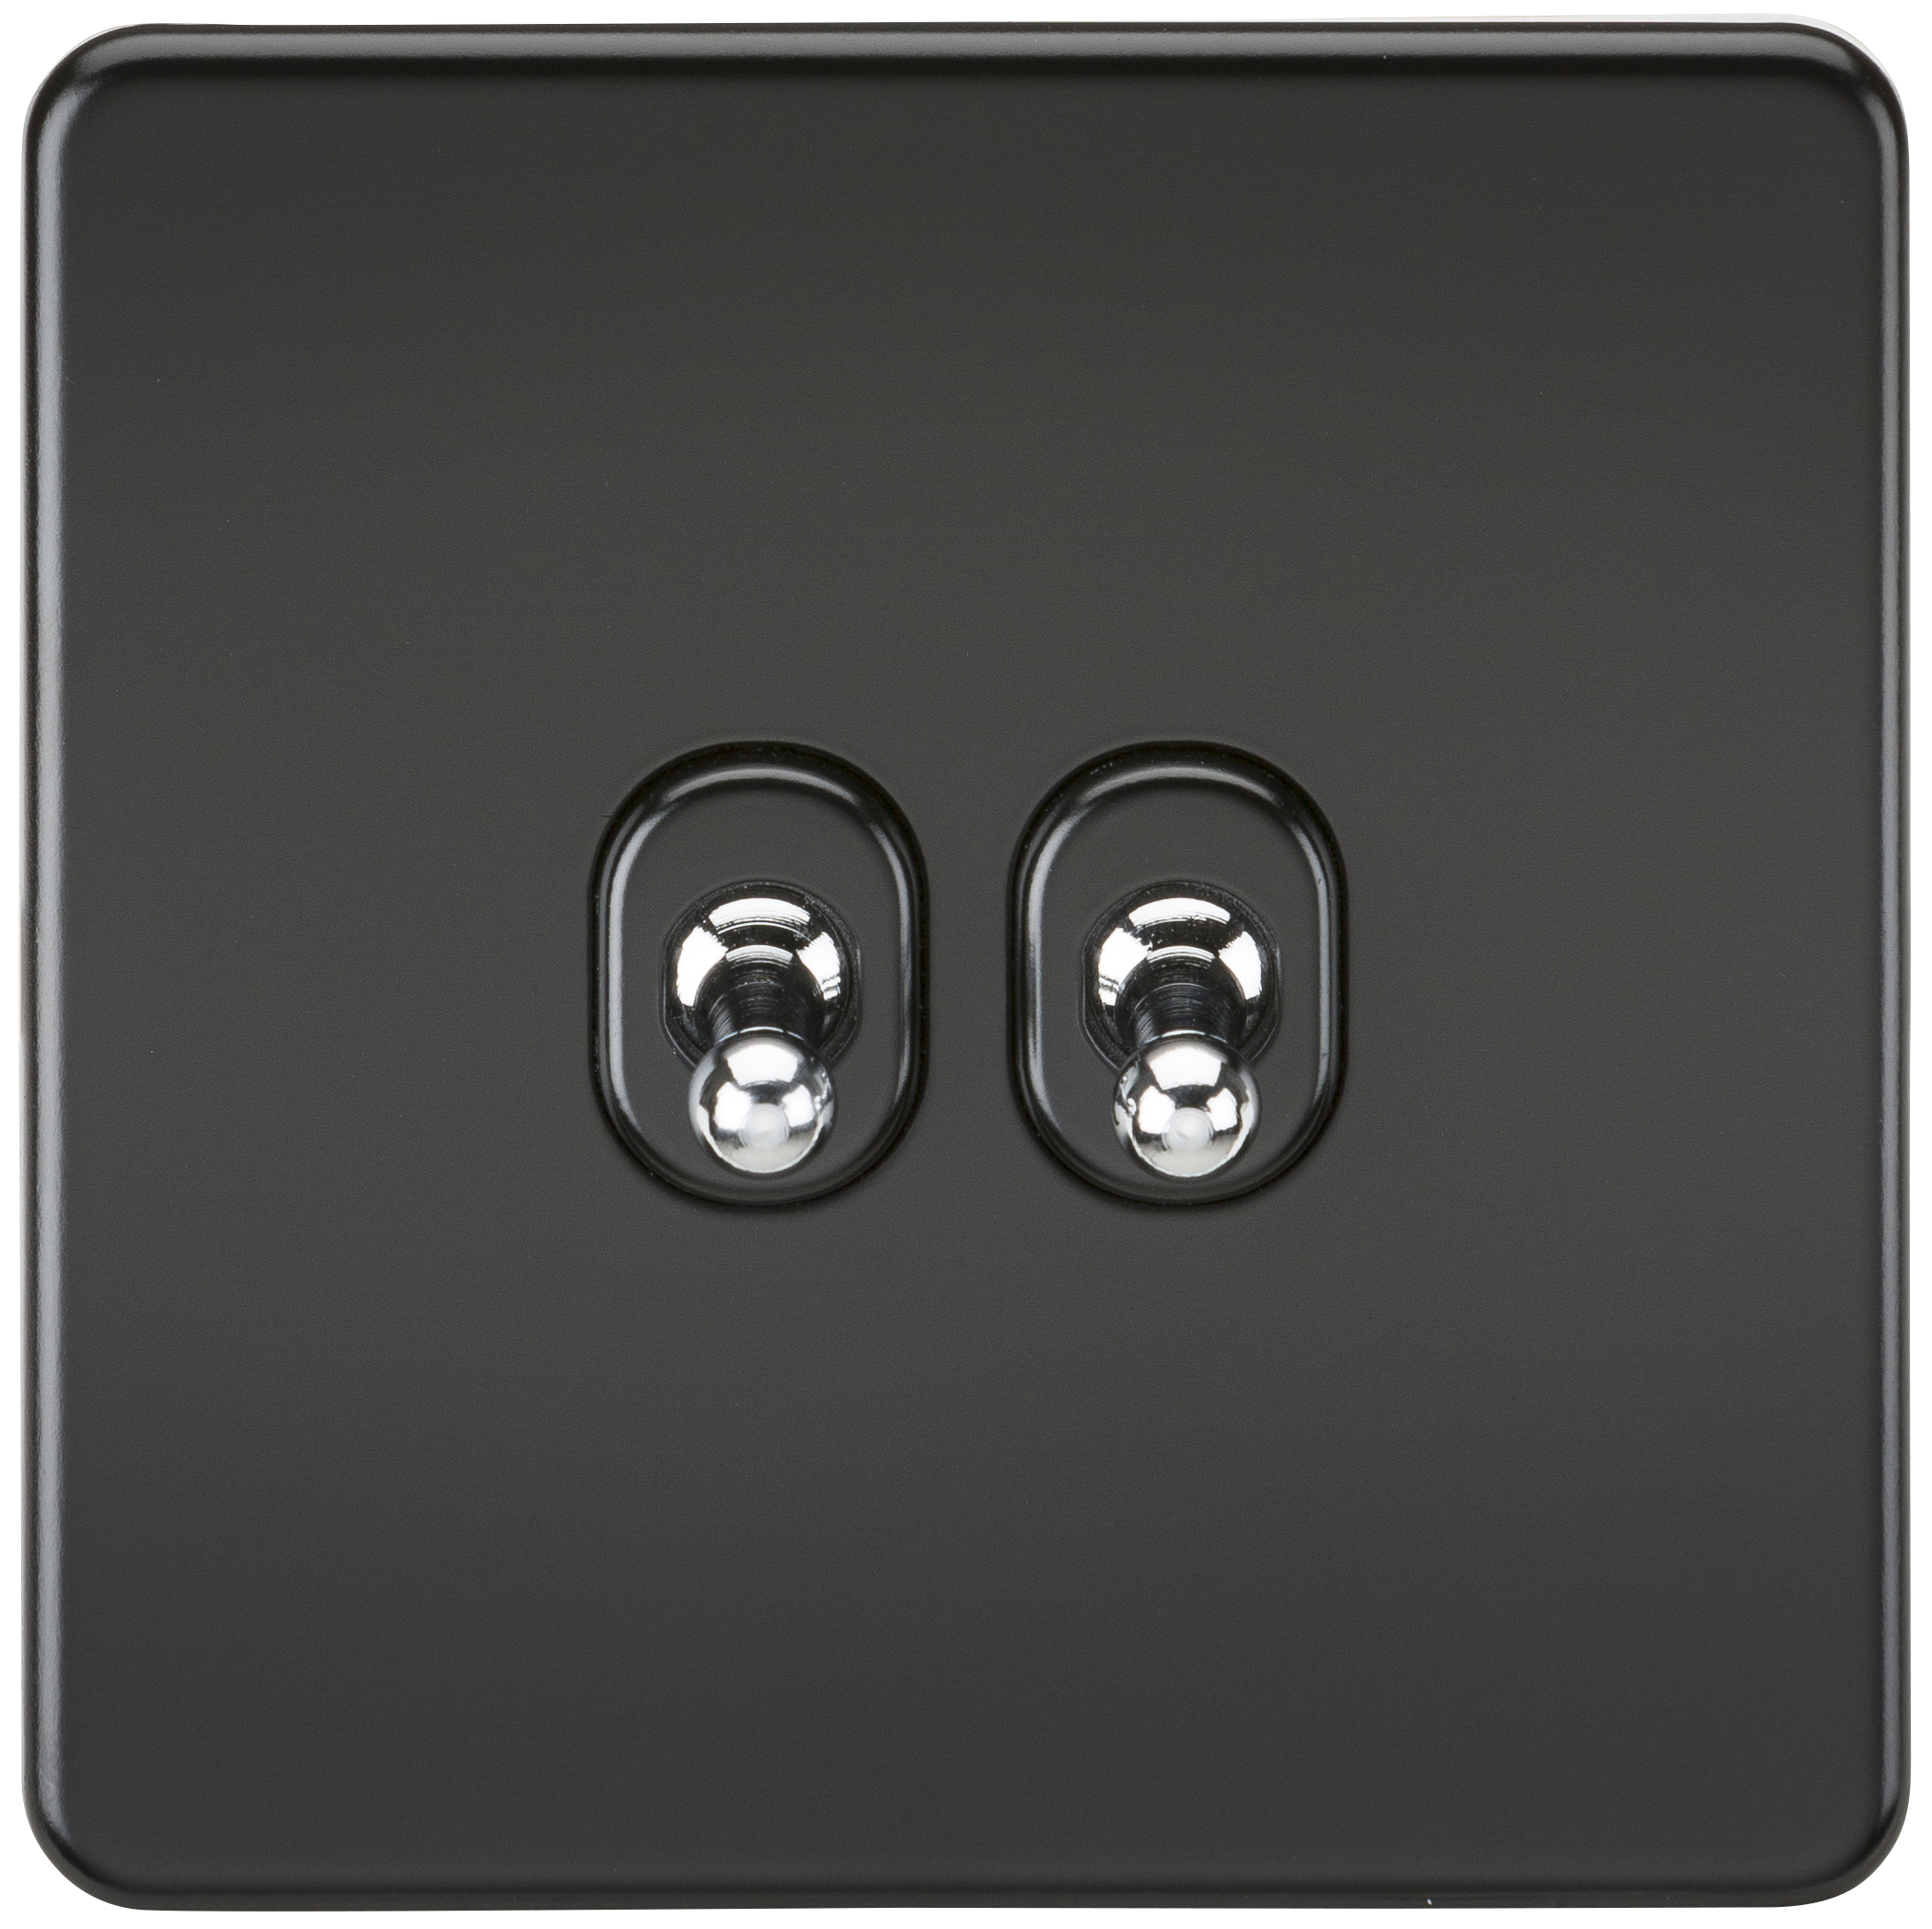 Screwless 10A 2G 2-Way Toggle Switch - Matt Black With Chrome Toggles - SF2TOGMB 